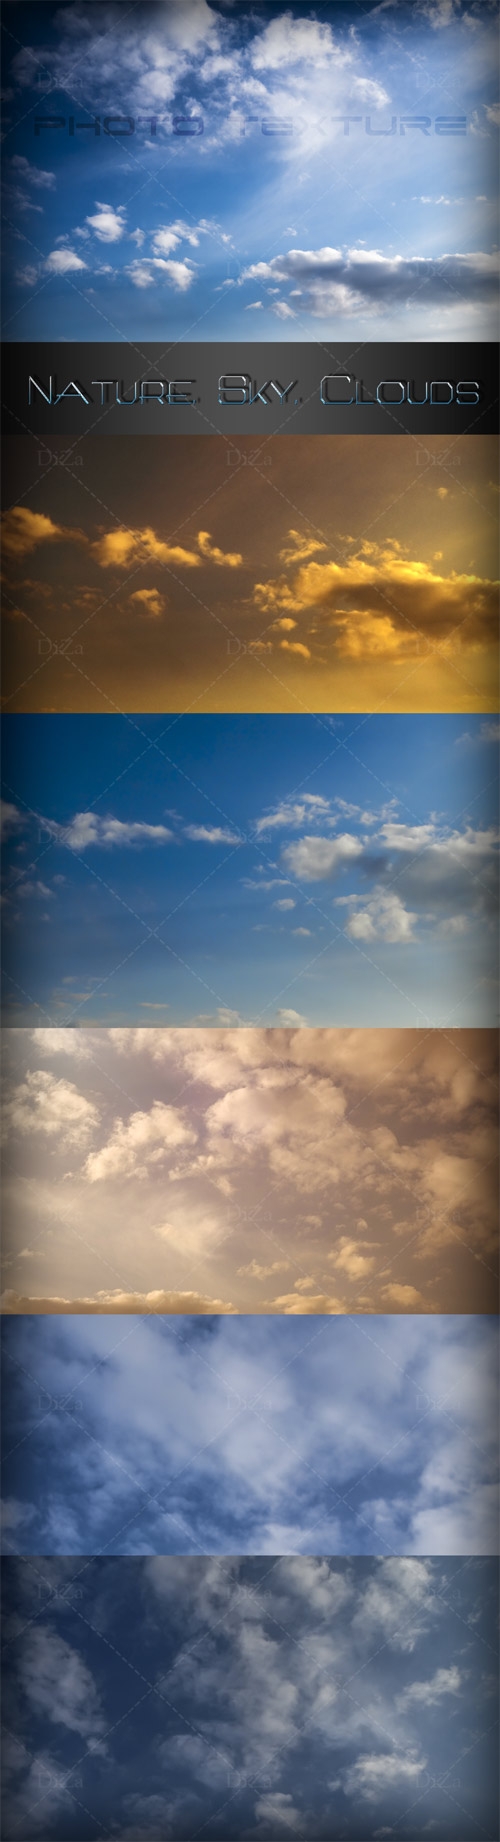 Photo texture - Nature. Sky. Clouds 